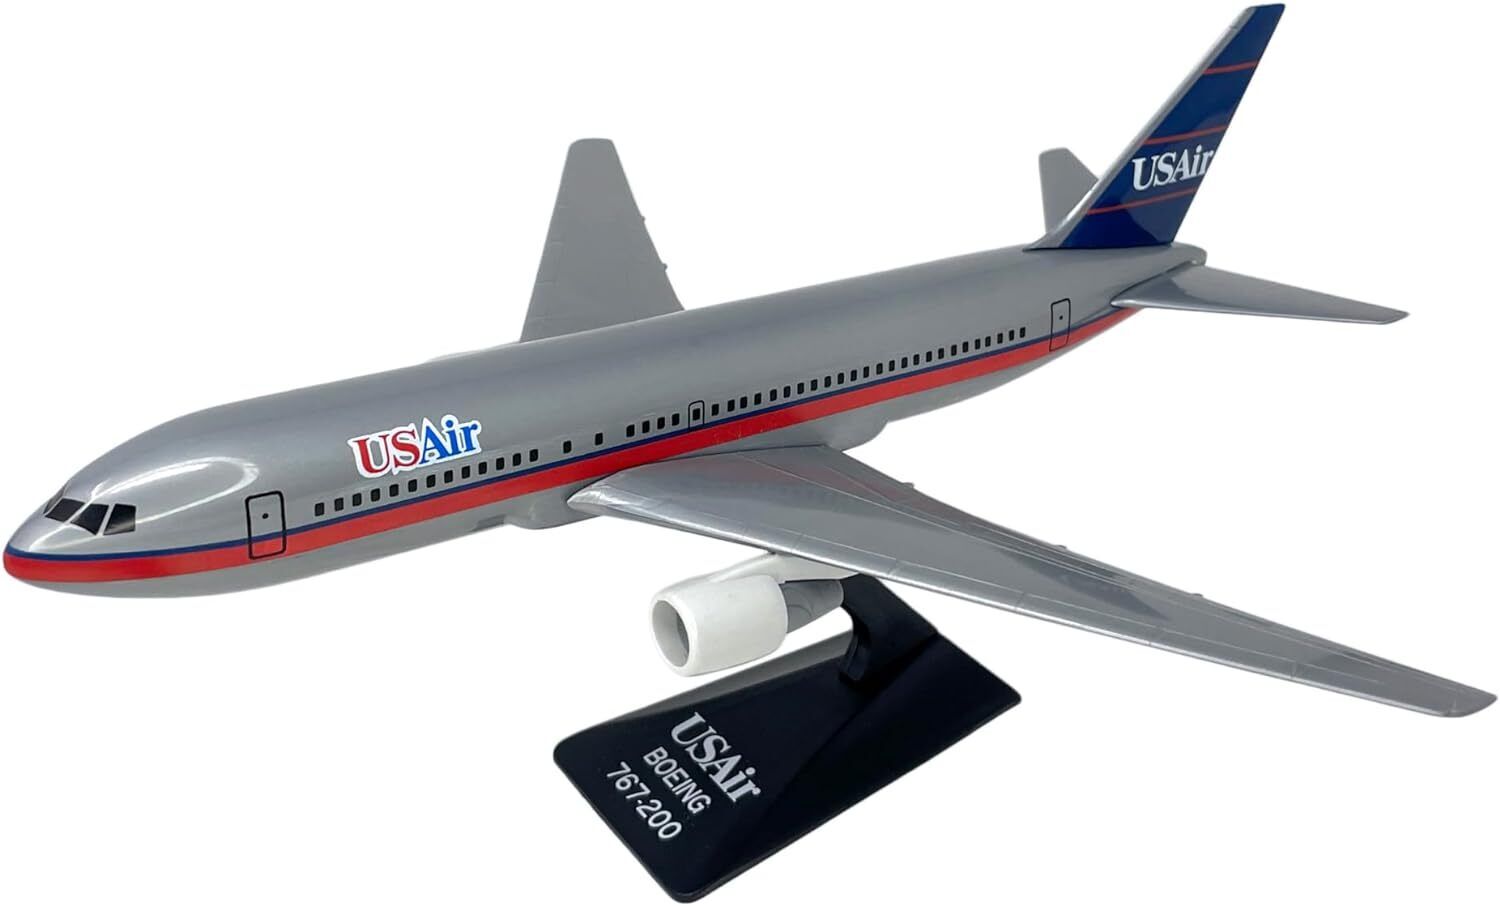 Flight Miniatures USAir Boeing 767-200 Silver Desk Display Model 1/200 Airplane